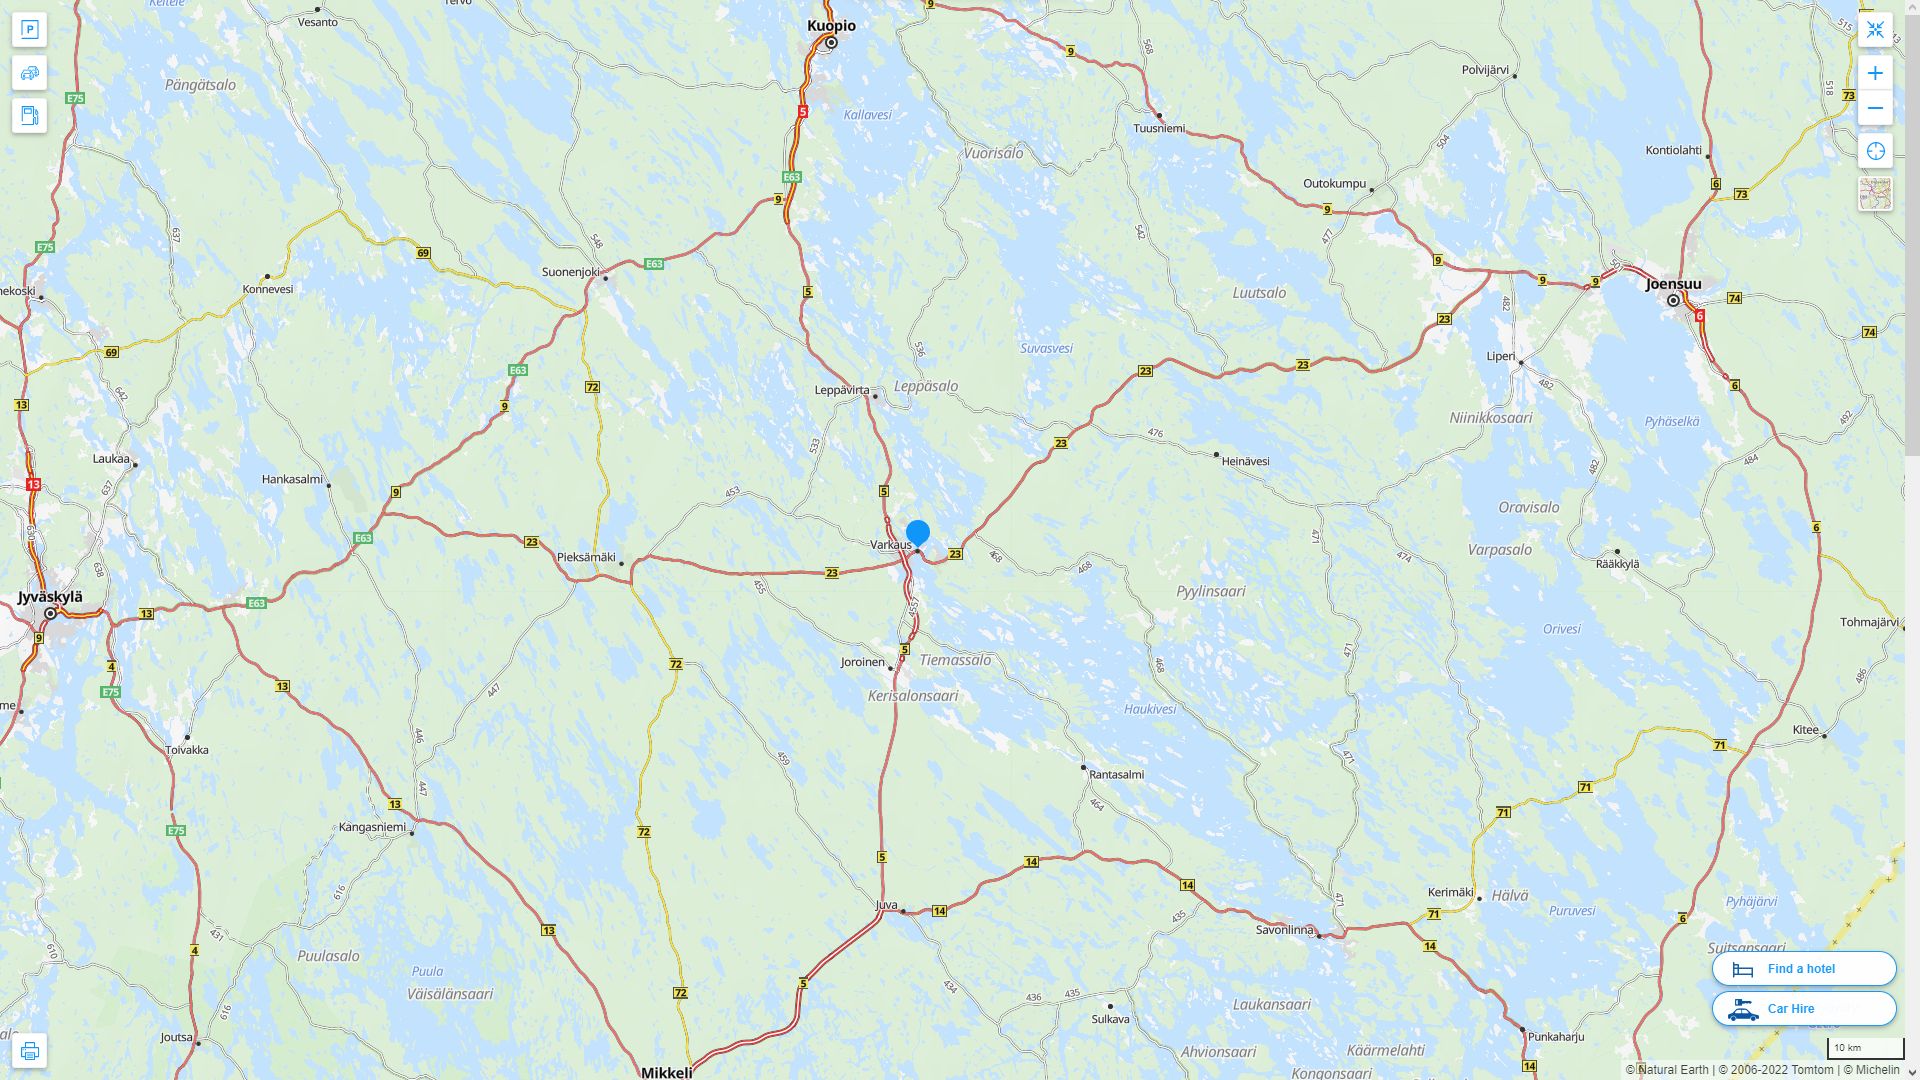 Varkaus Finlande Autoroute et carte routiere